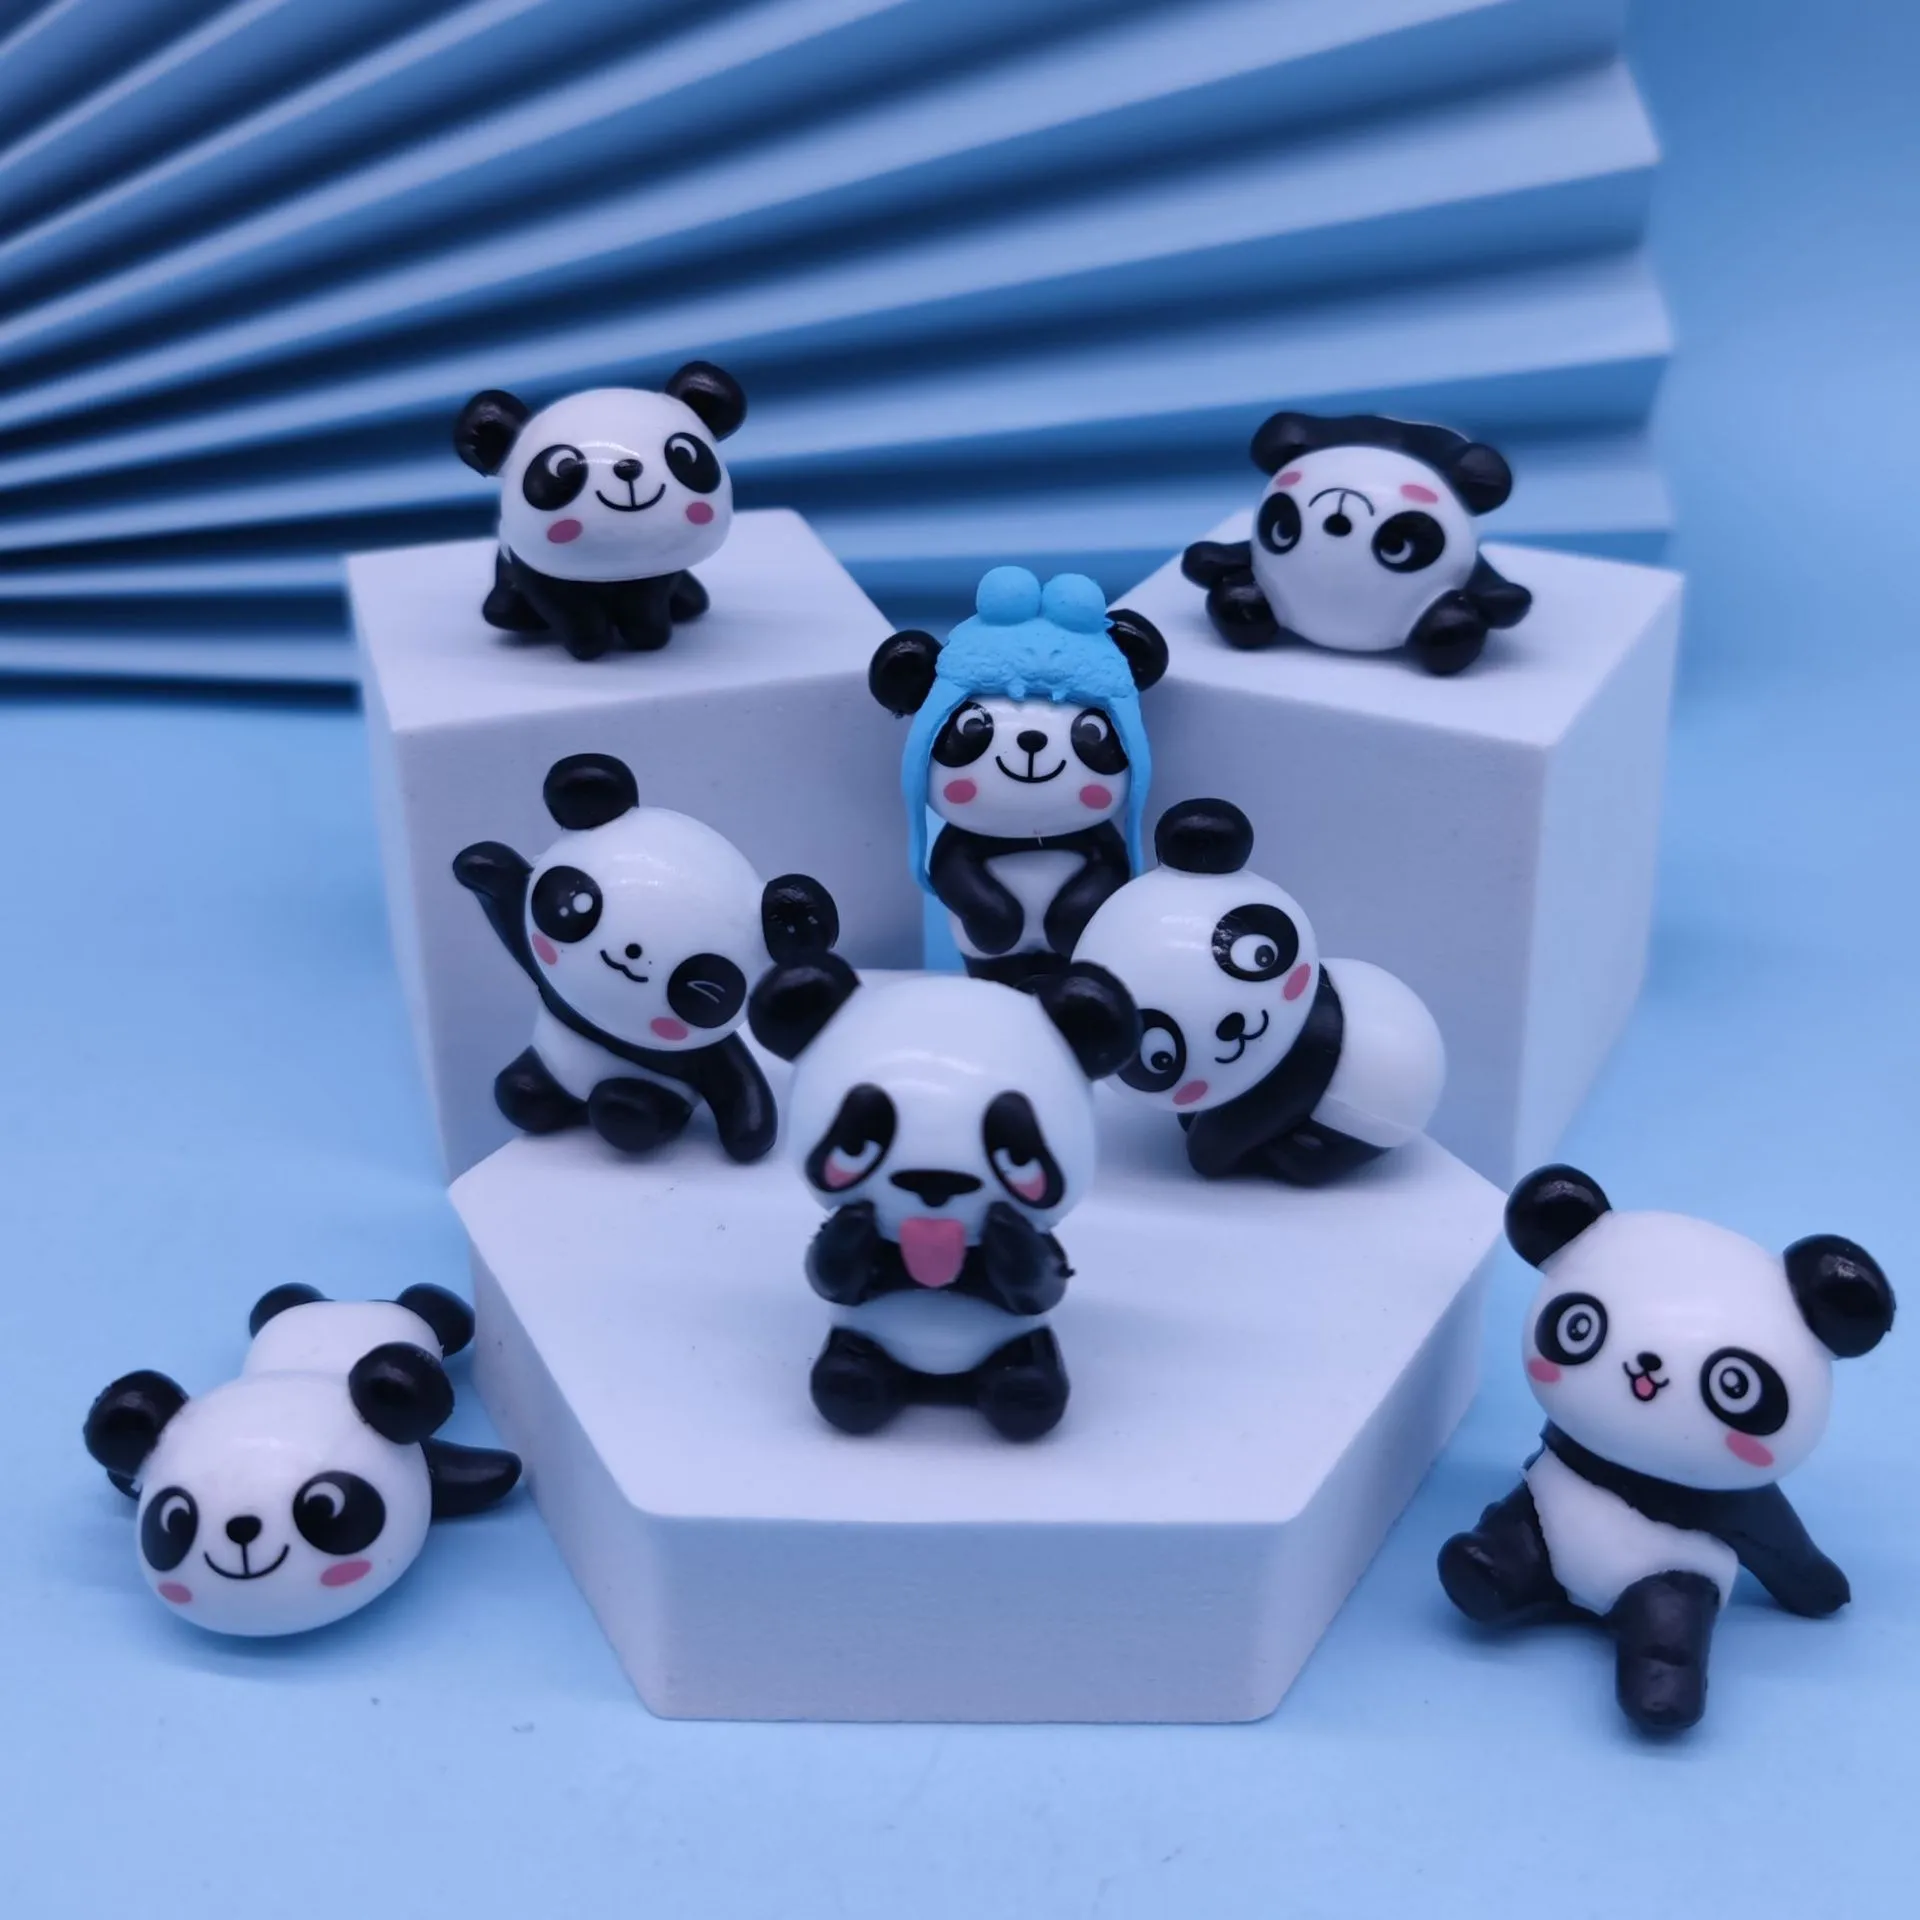 

8pcs/set Miniature Ornaments Panda Pendant Figurines Craft Resin Dolls For Fairy Garden Figurines Miniature Home Decoration